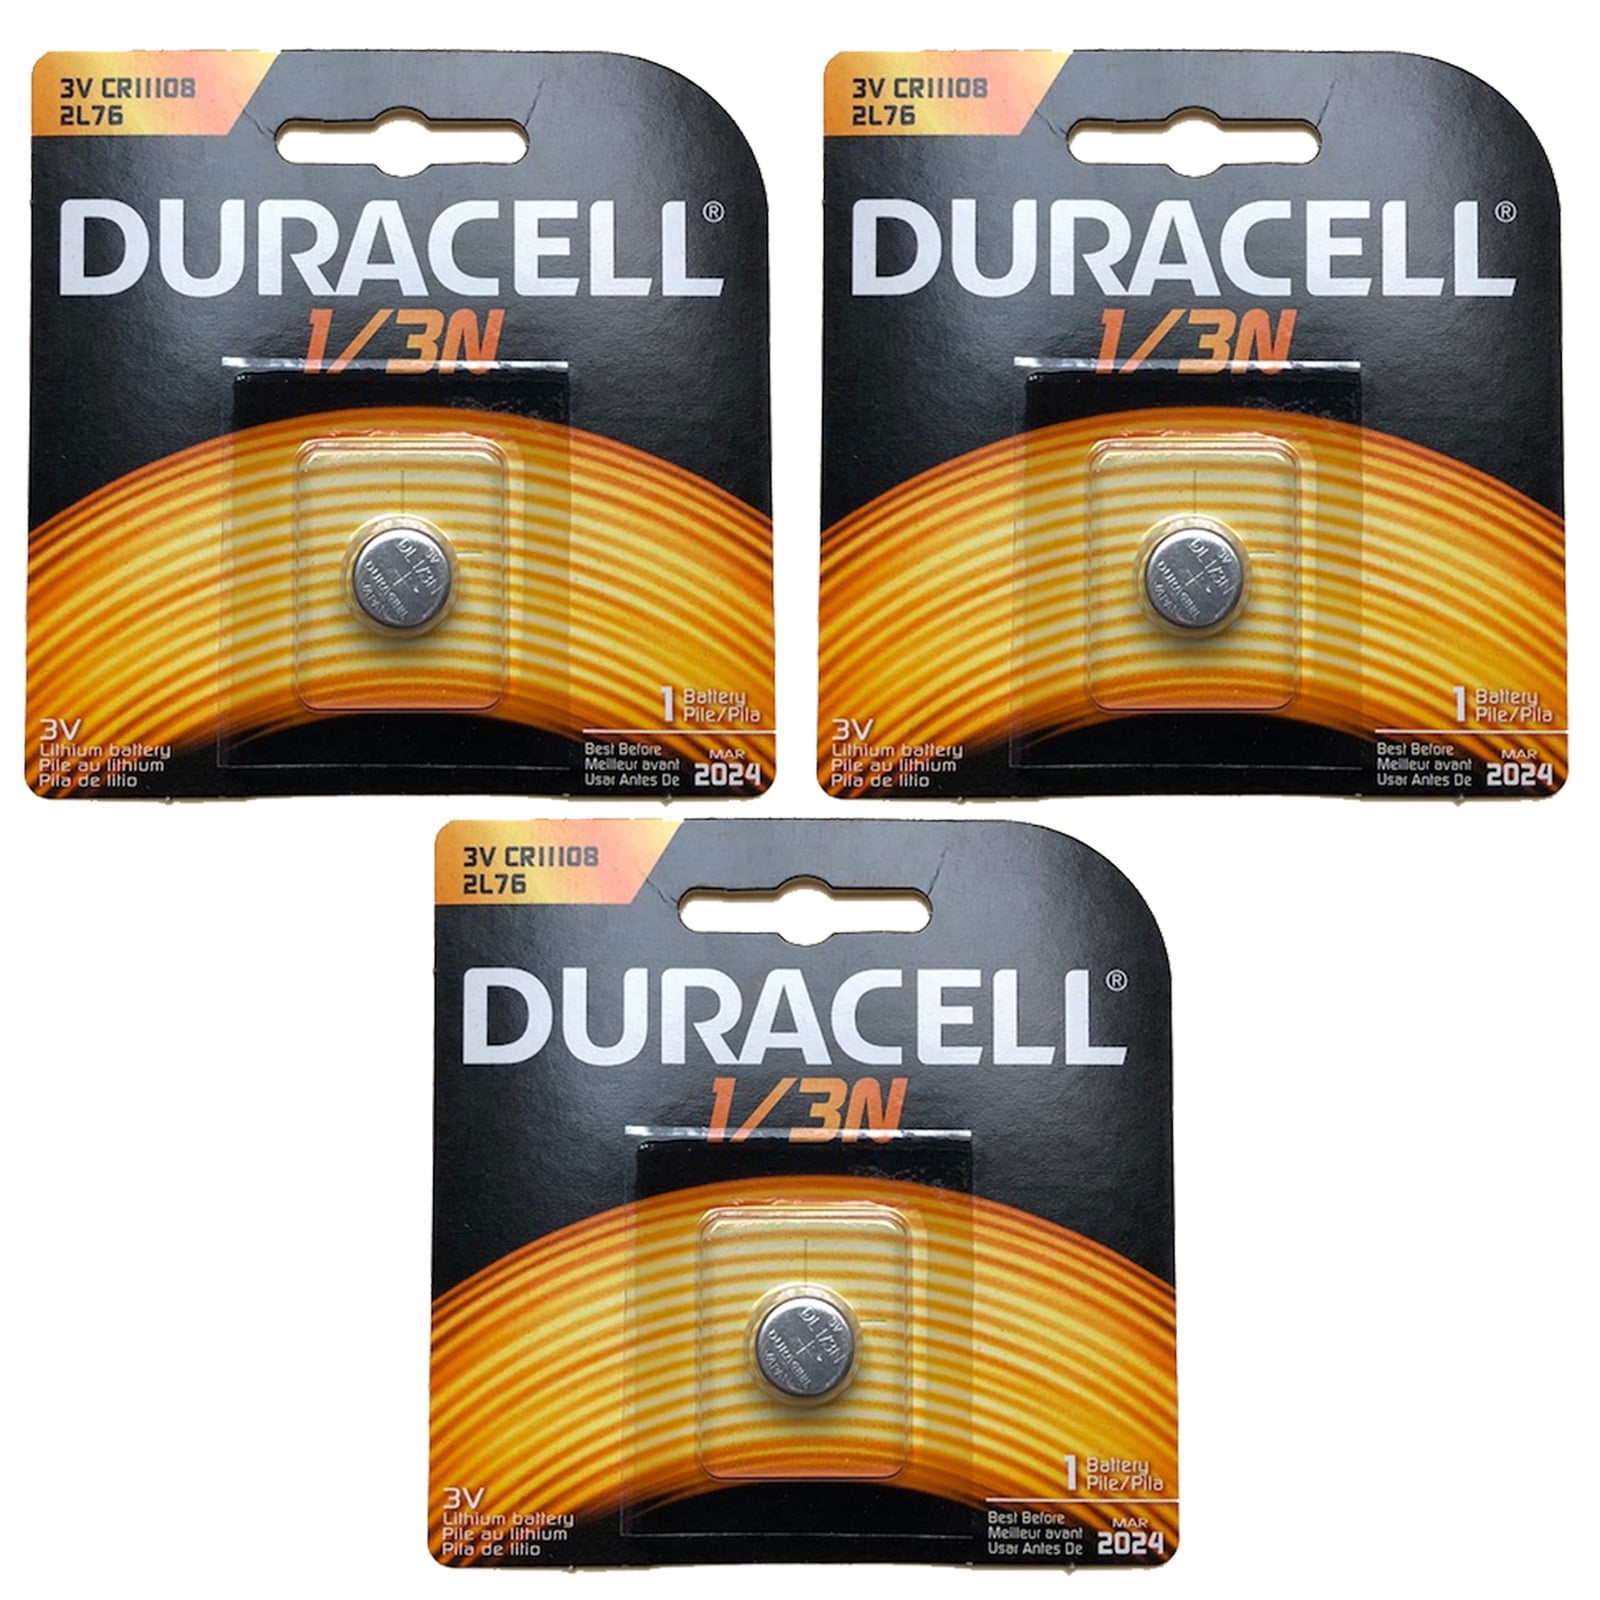 show original title 2028 Details about   Duracell 2l76 1/3n lithium battery 3v batteries cr1/3n/cr1108 EXP 